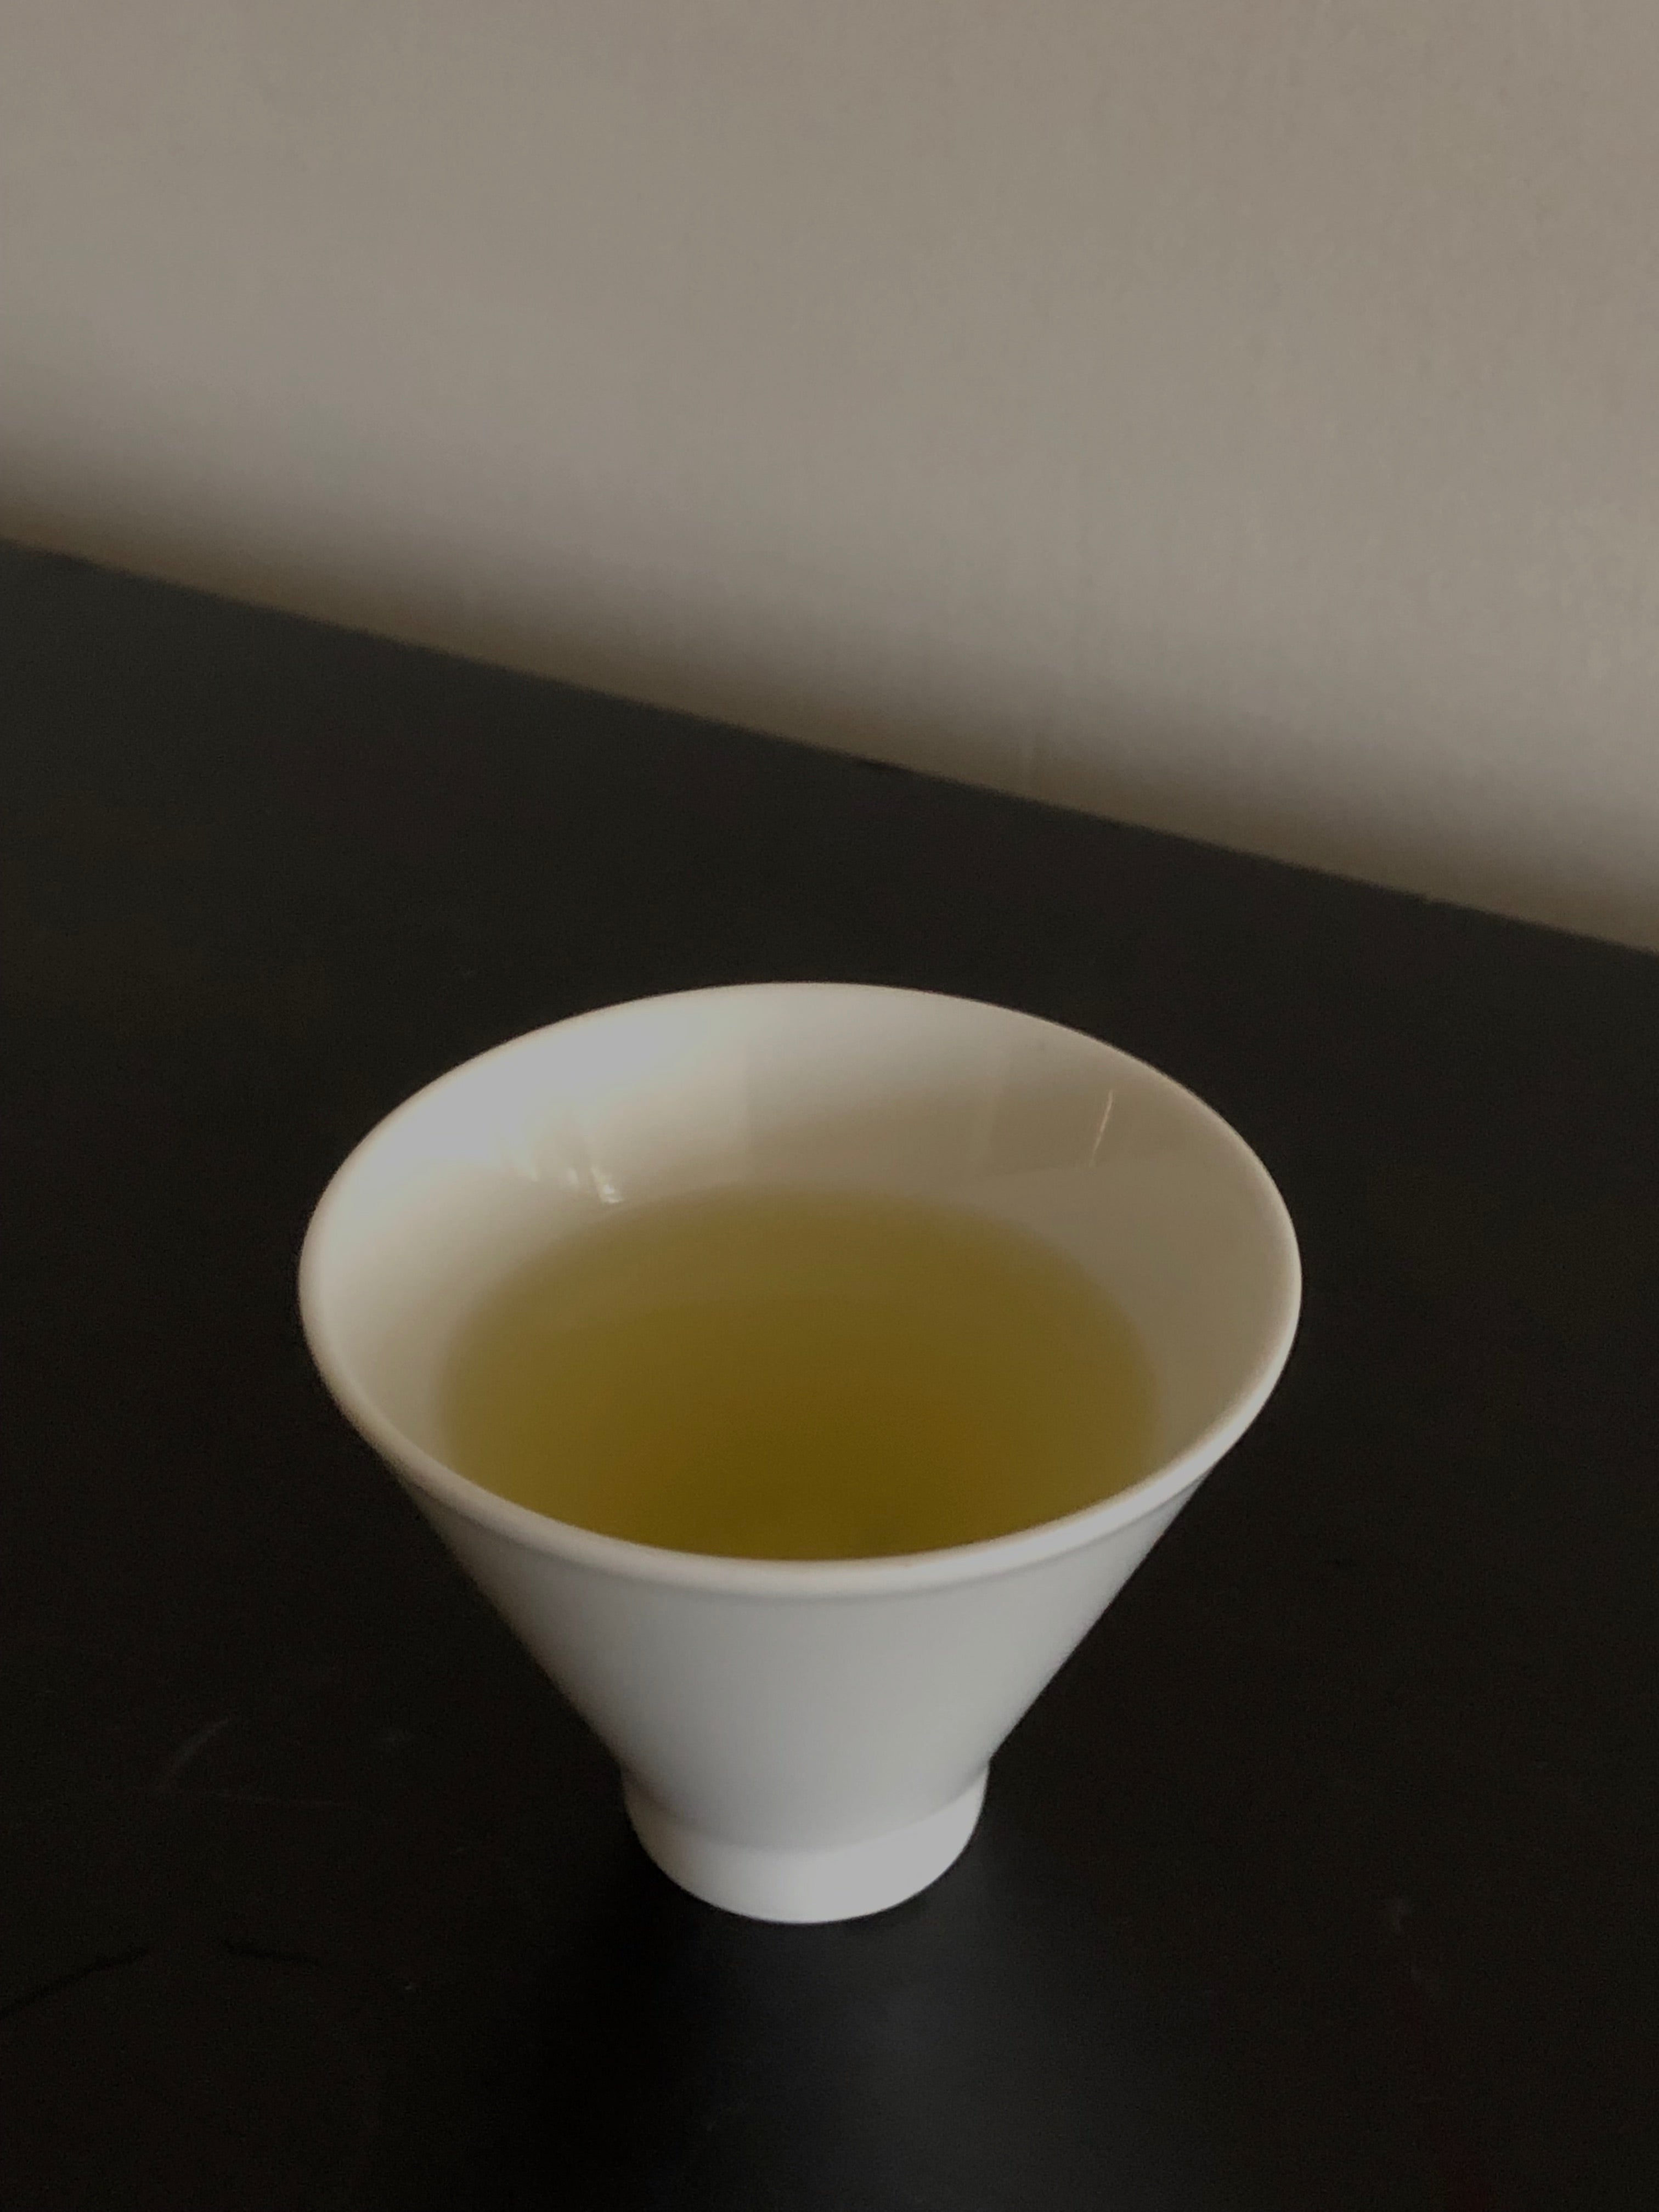 Fukamushi sencha green tea loose leaf brew side view from Yame Fukuoka sold by Sabo Tea Australia - Chiyonoen